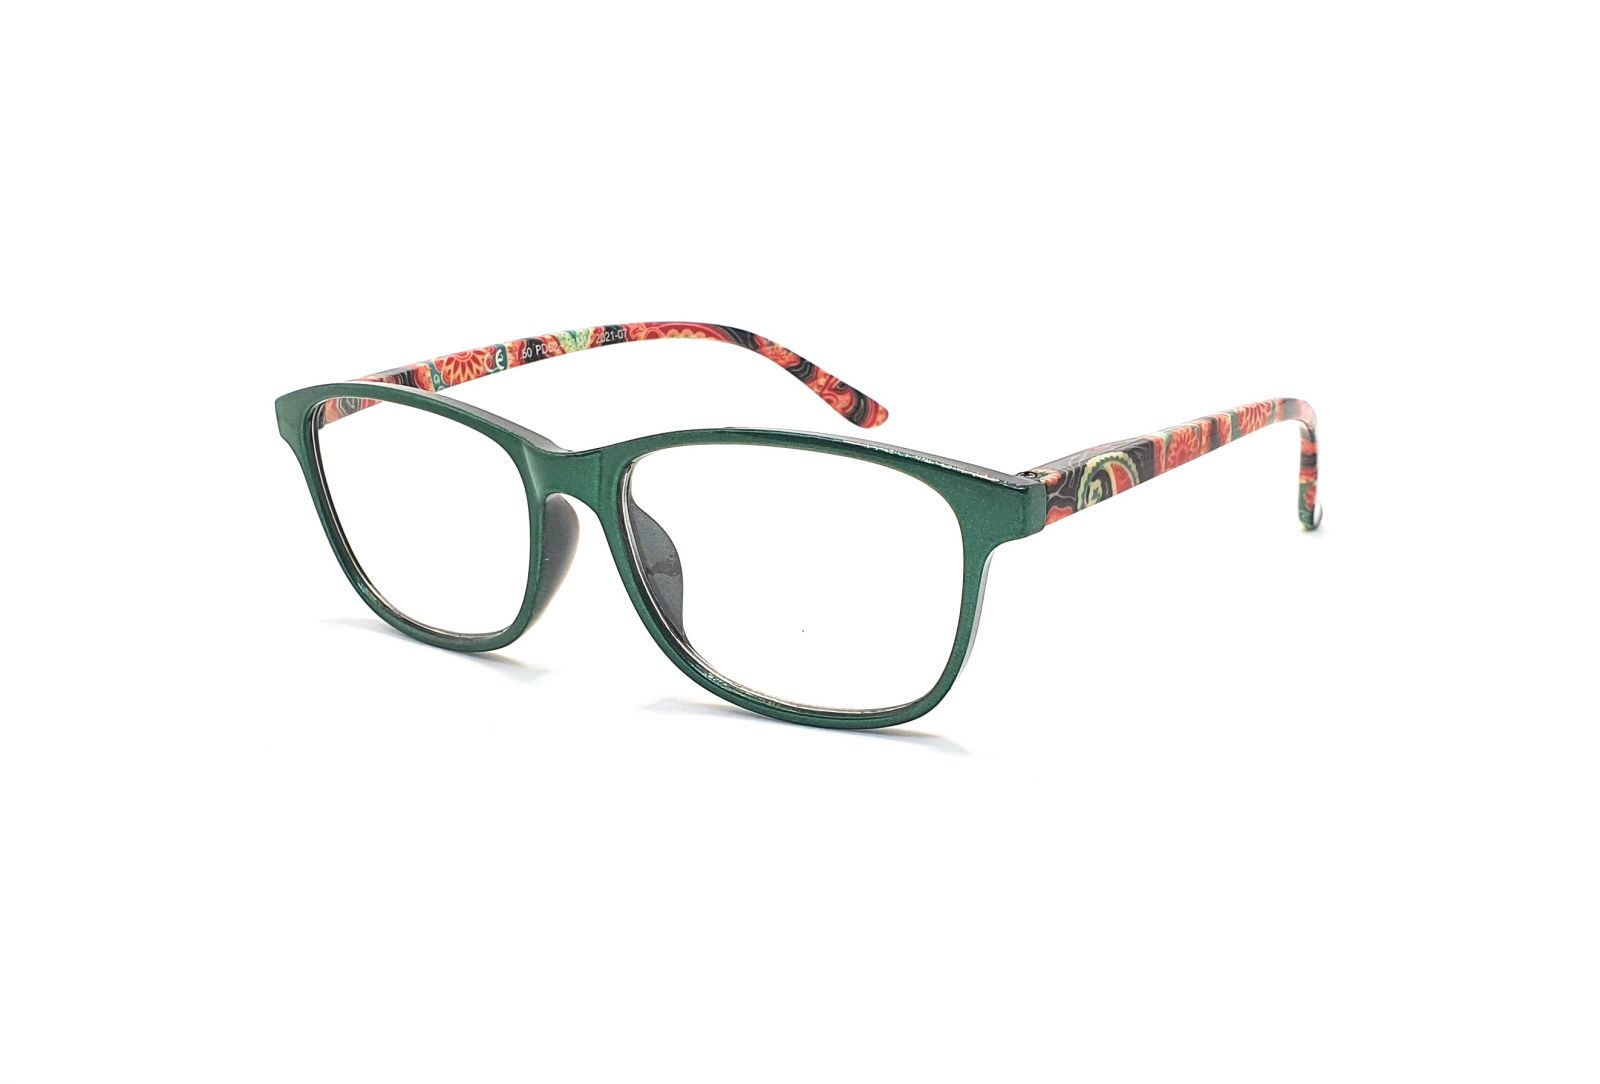 INfocus Dioptrické brýle R4150 / +3,00 flex green-mix